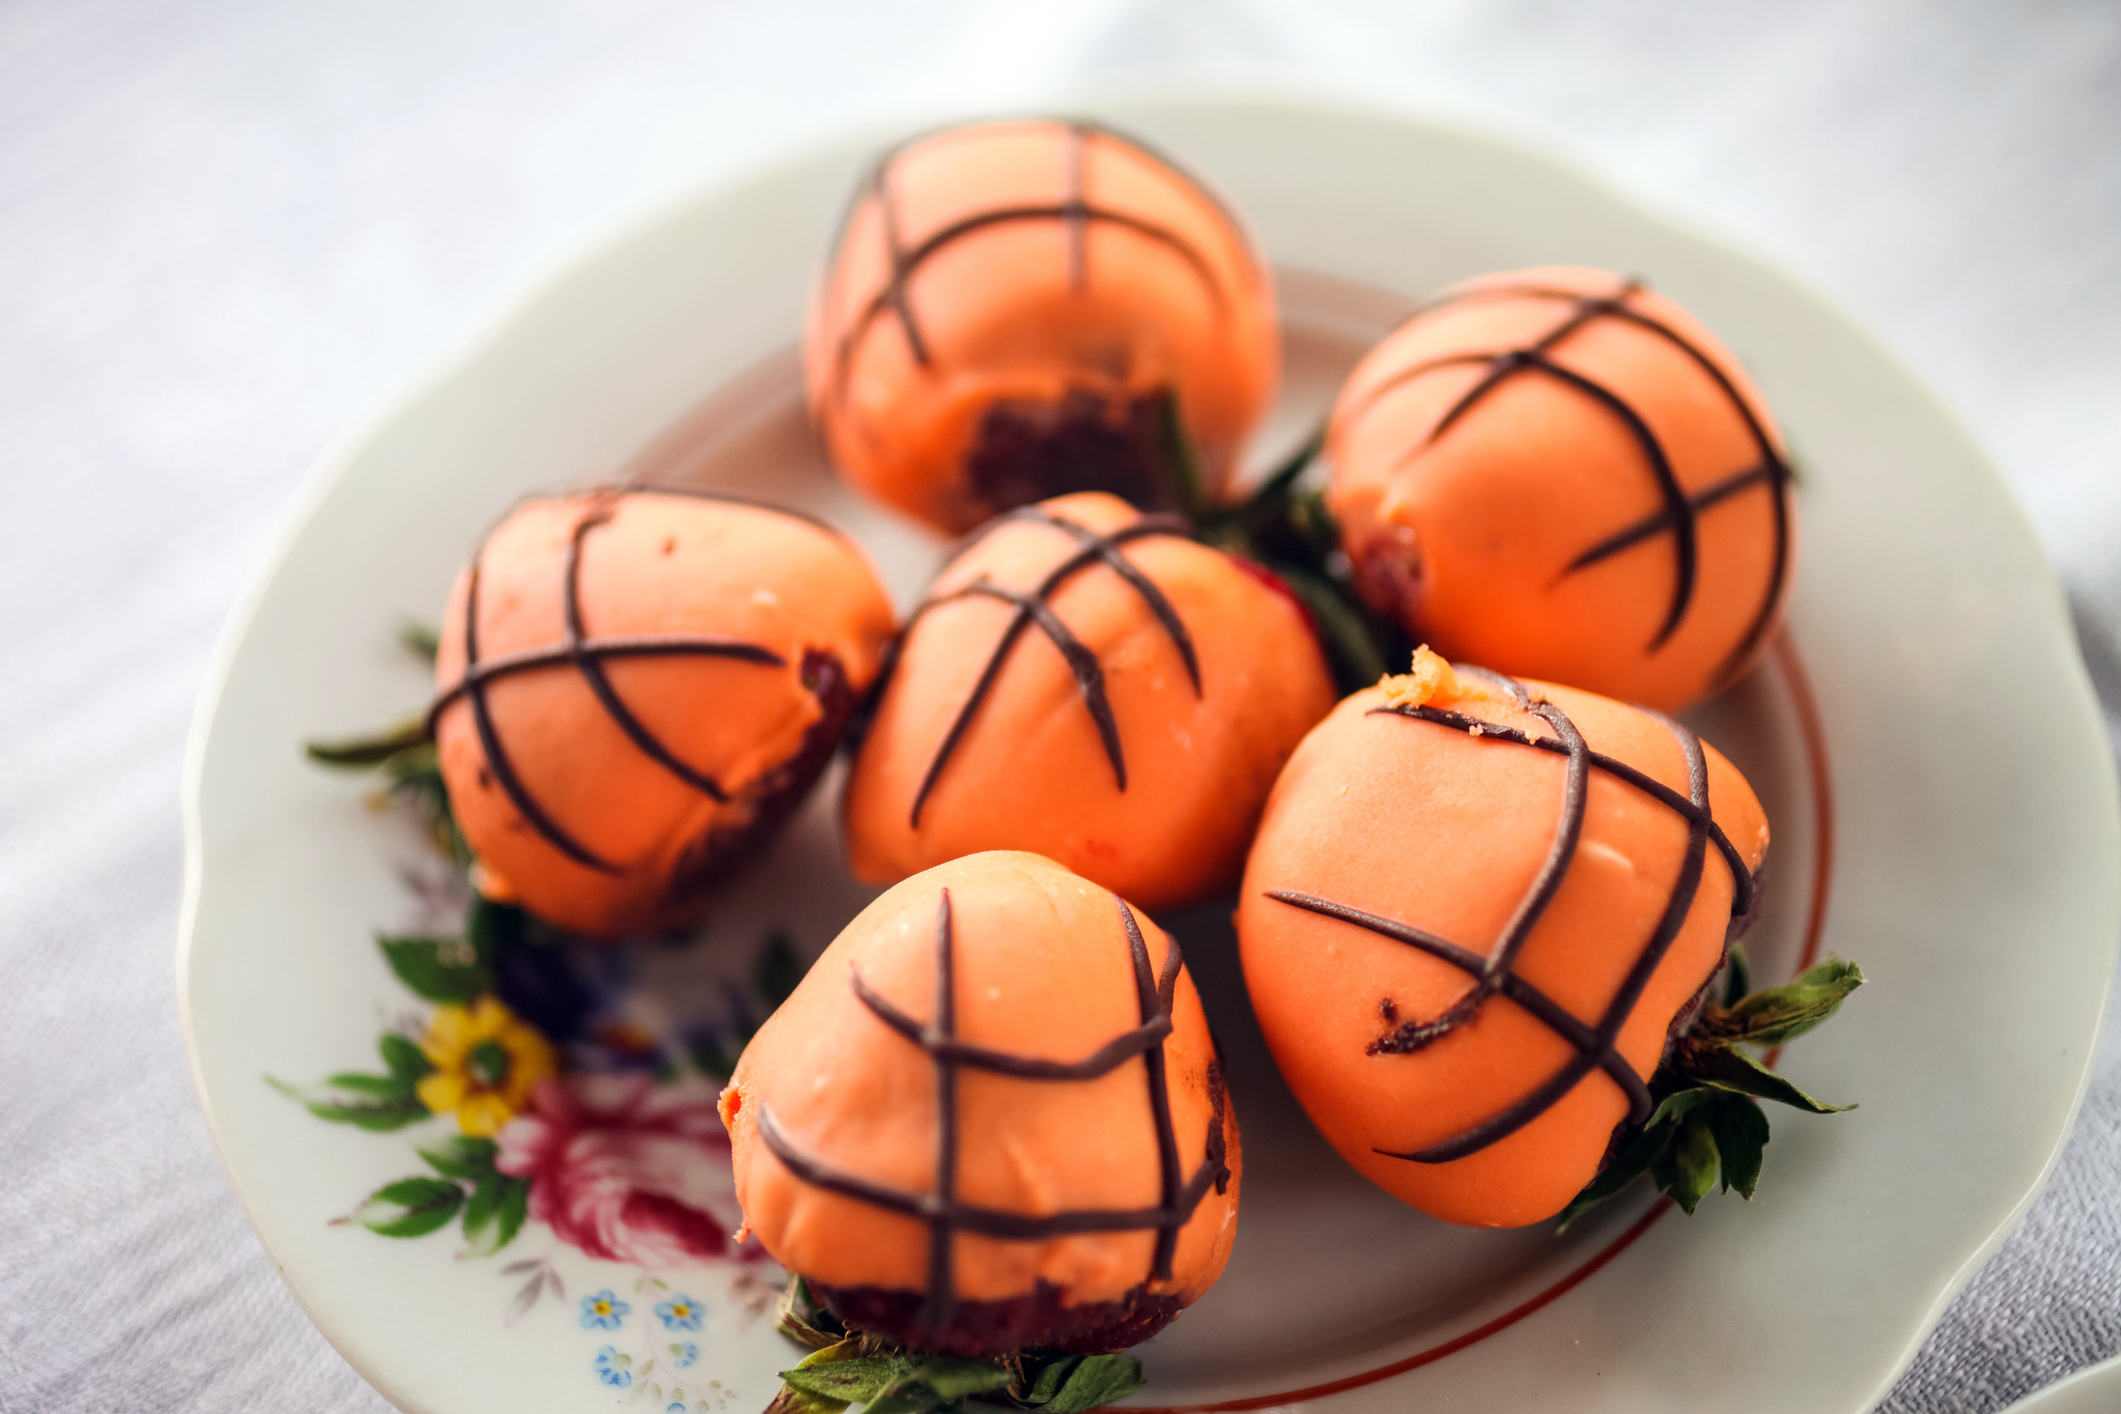 Chocolate covered strawberry basketballs